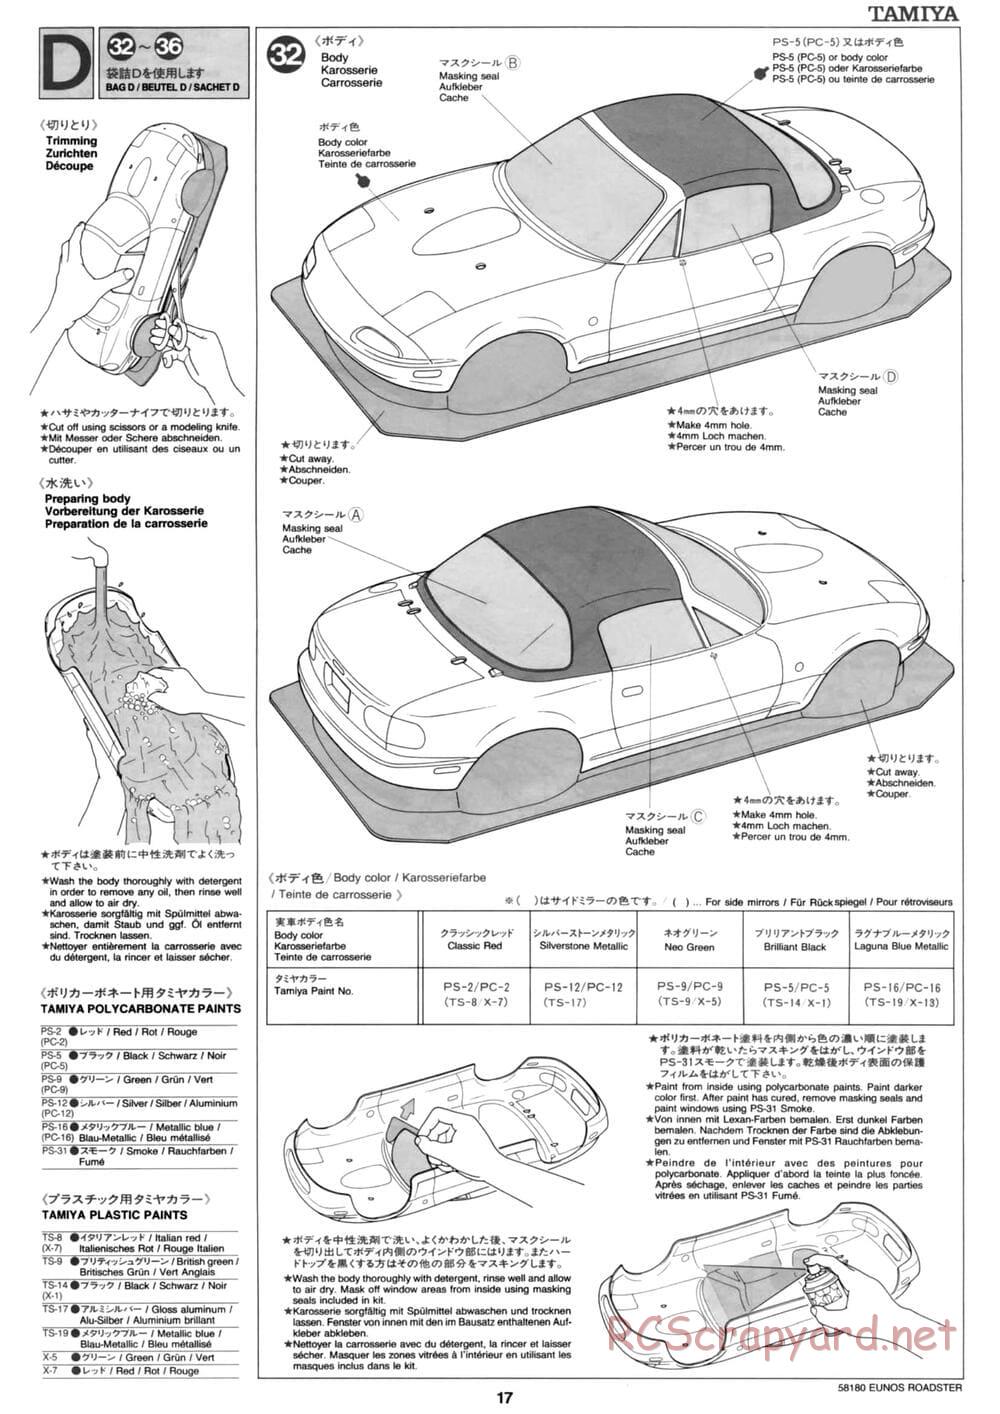 Tamiya - Eunos Roadster - M02M Chassis - Manual - Page 17